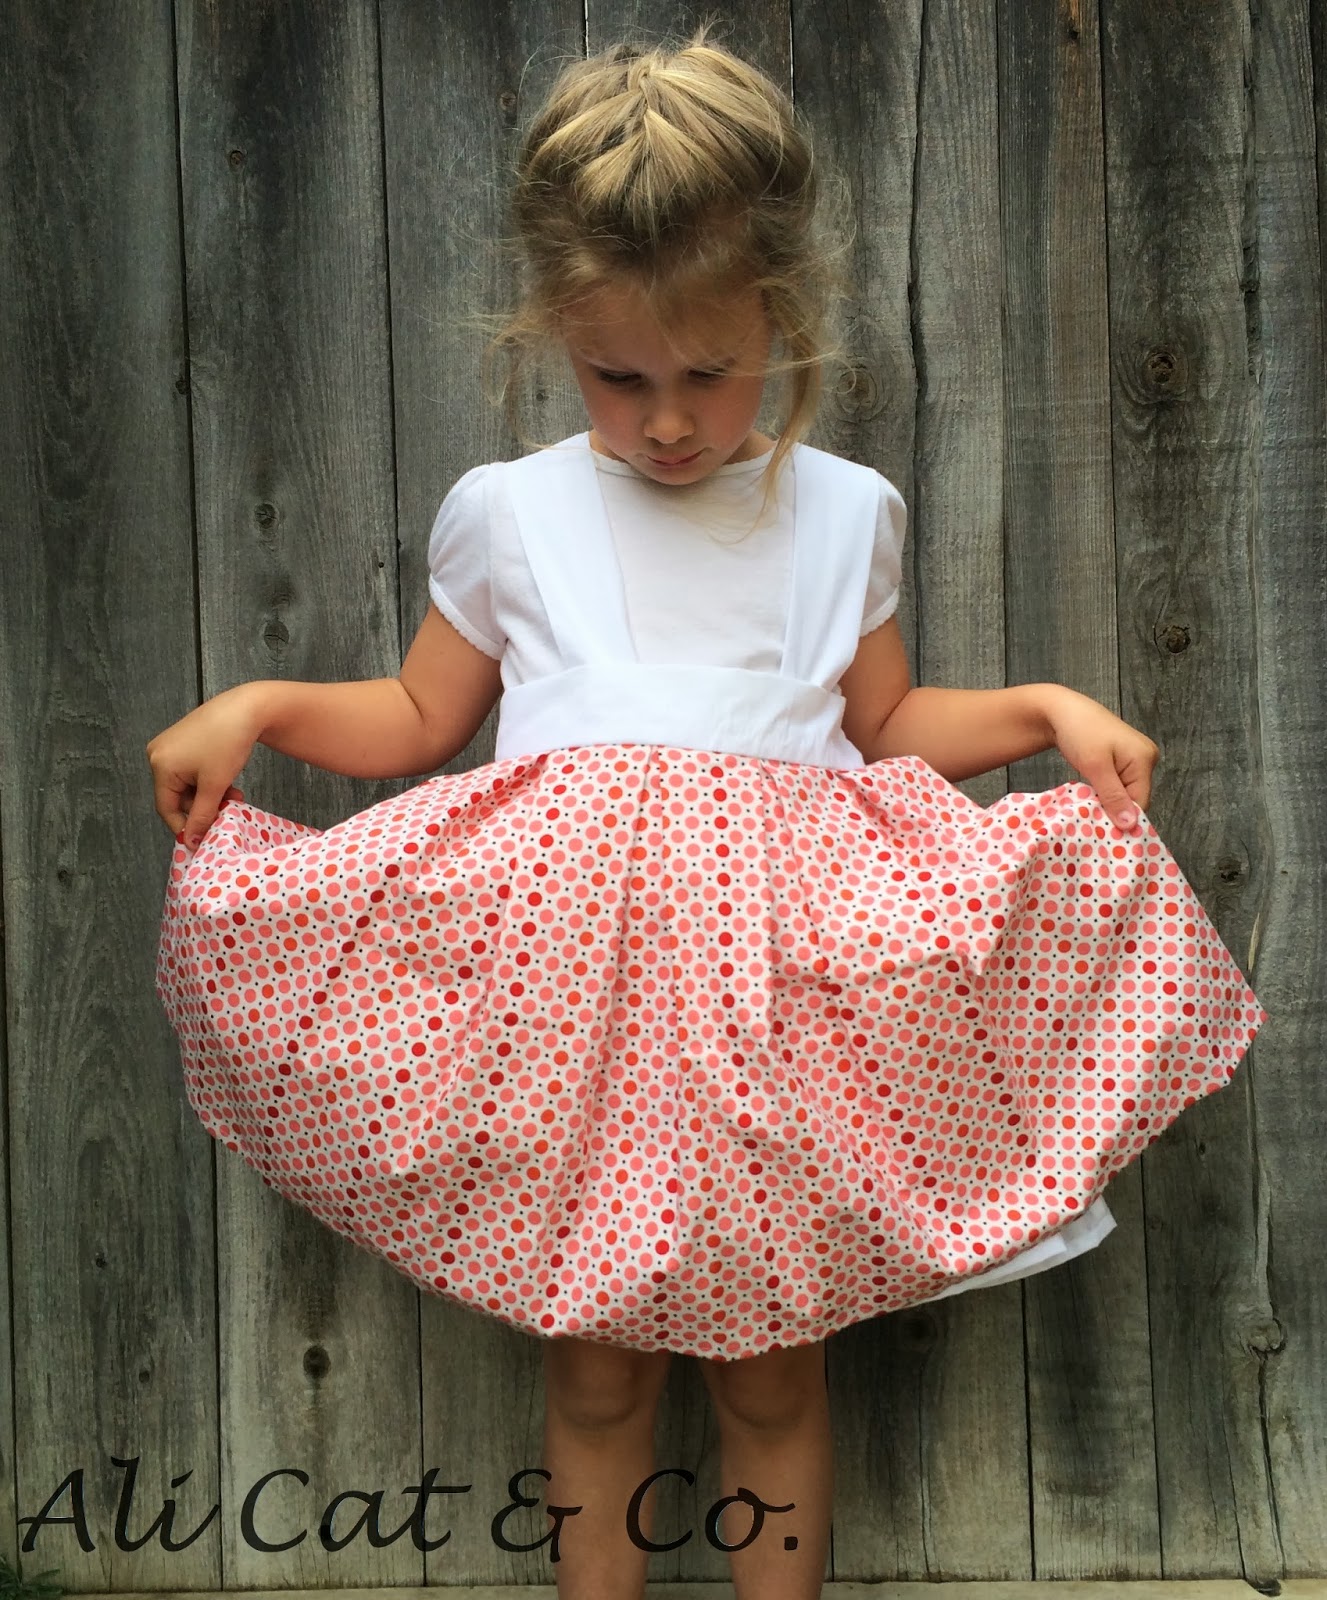 Ali Cat & Co.: My Little Plumcake High Waisted Skirt